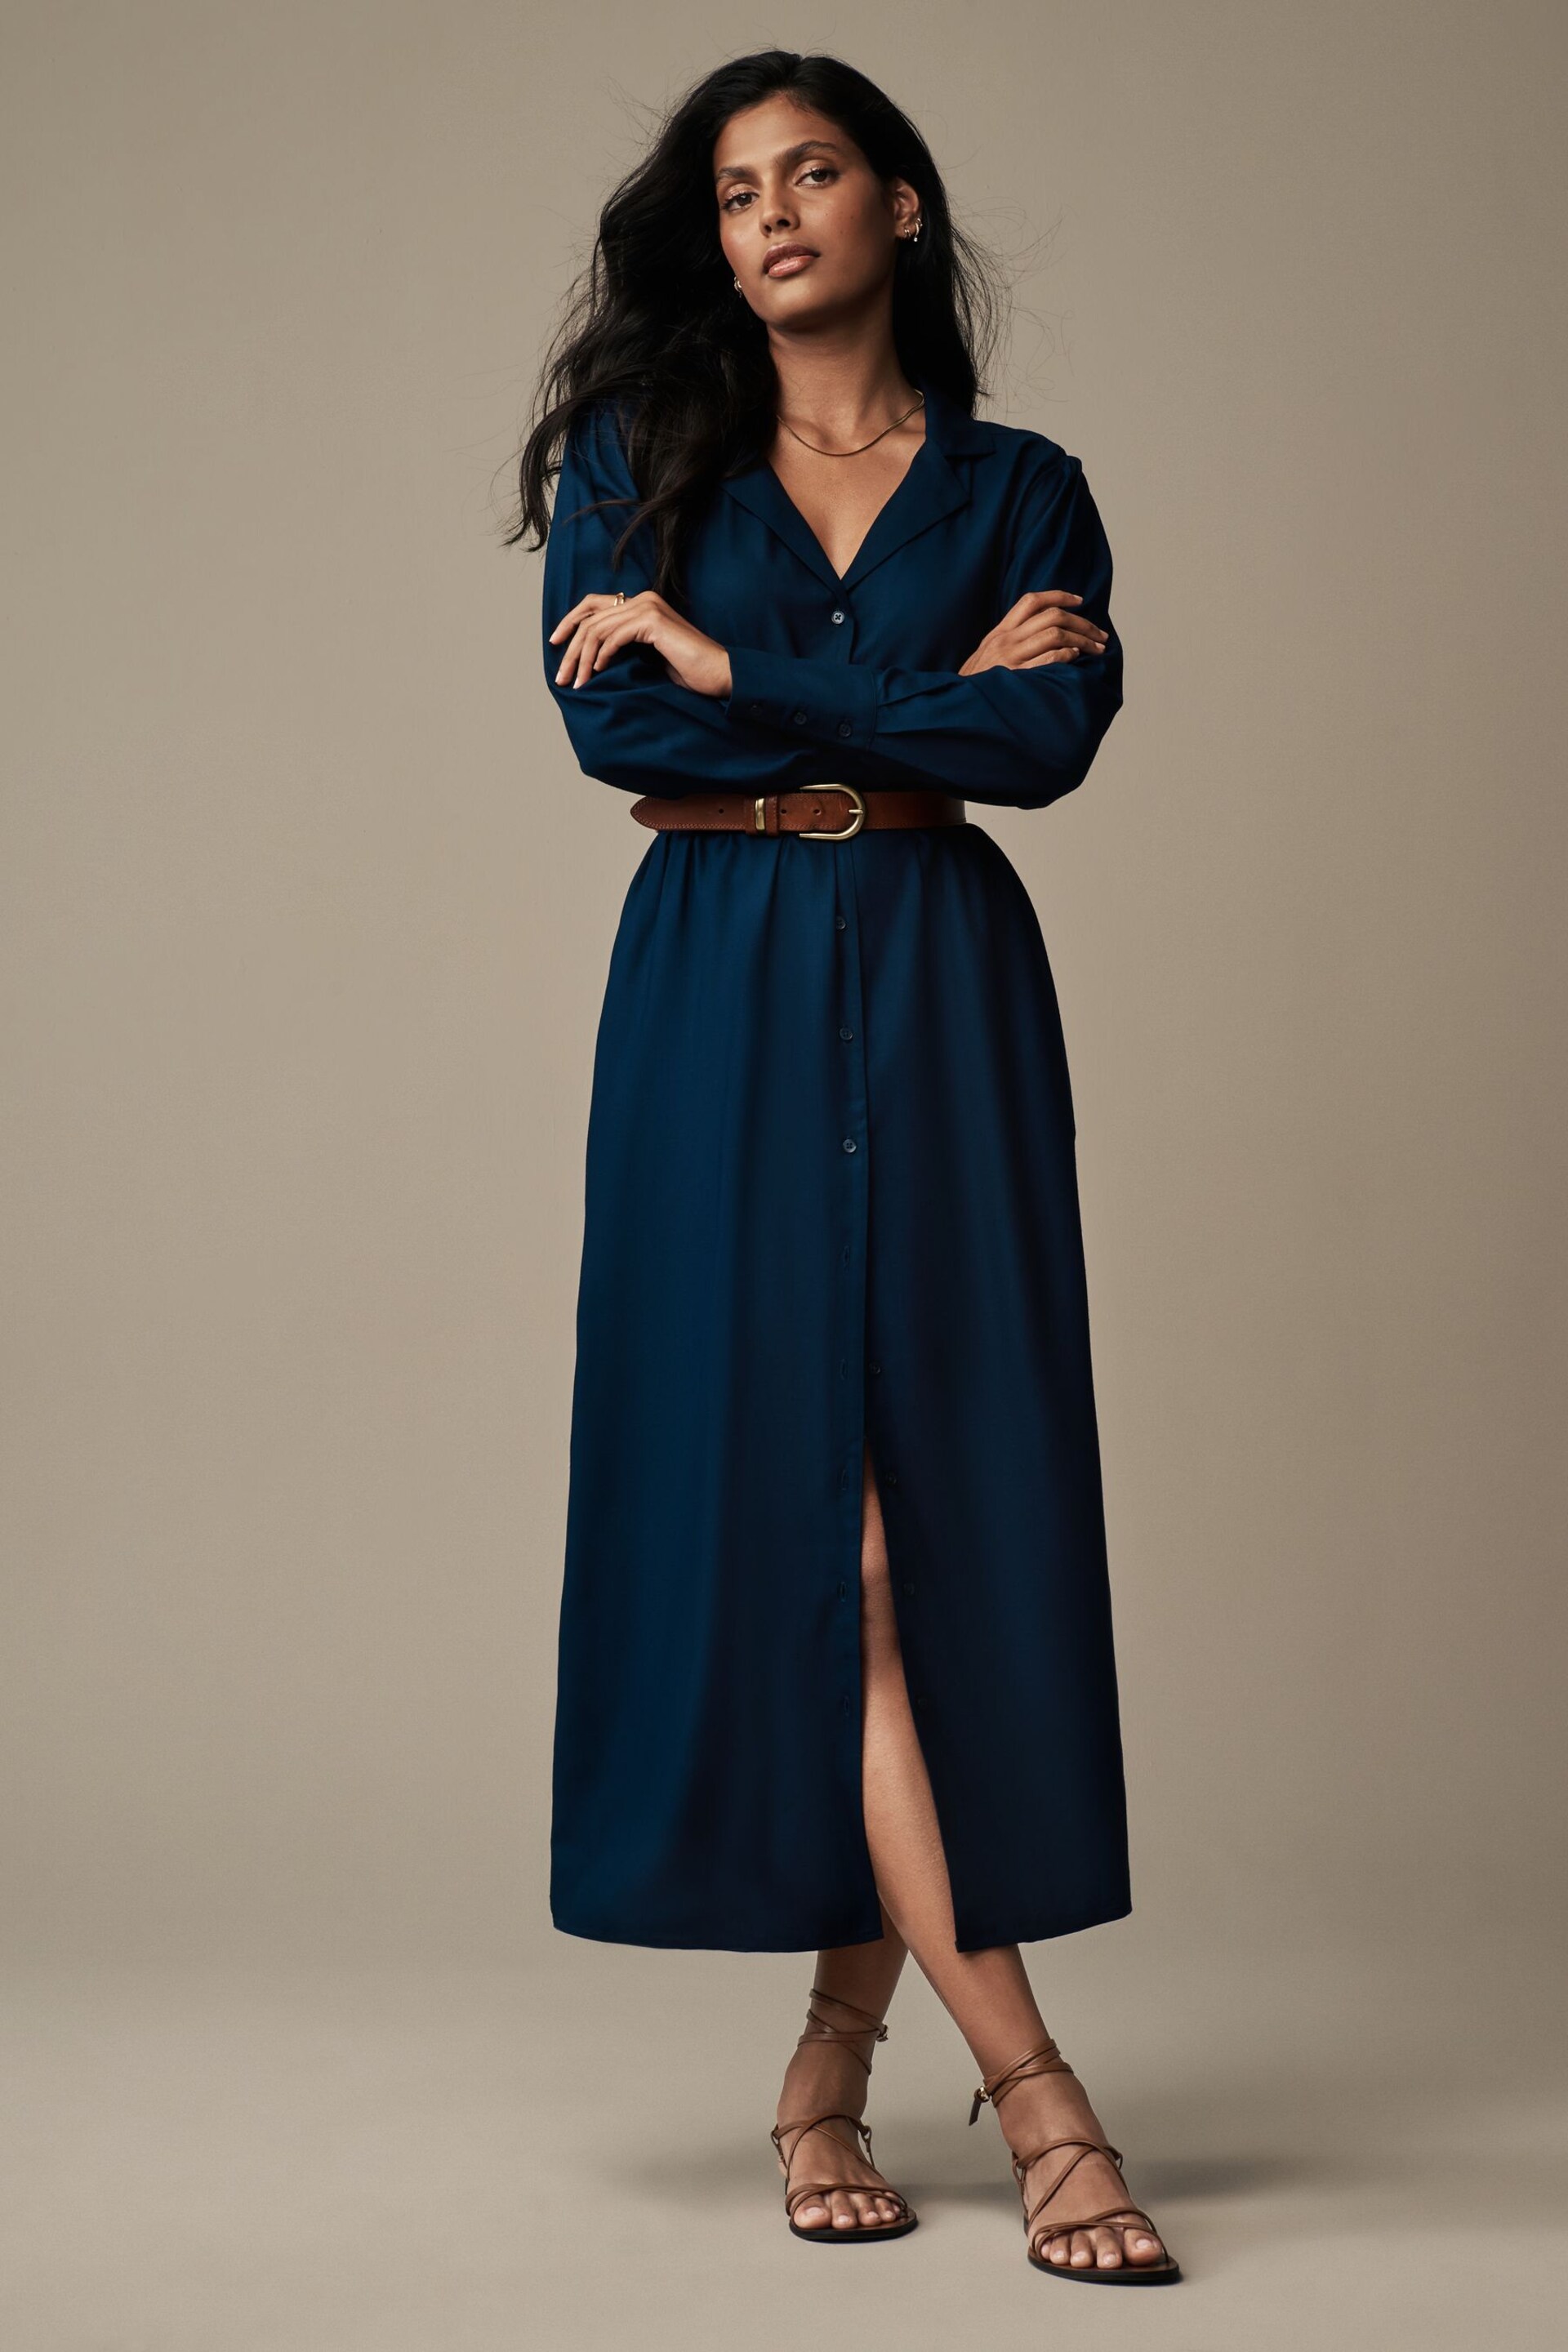 Laura Ashley Navy Midaxi Shirt Dress - Image 1 of 5